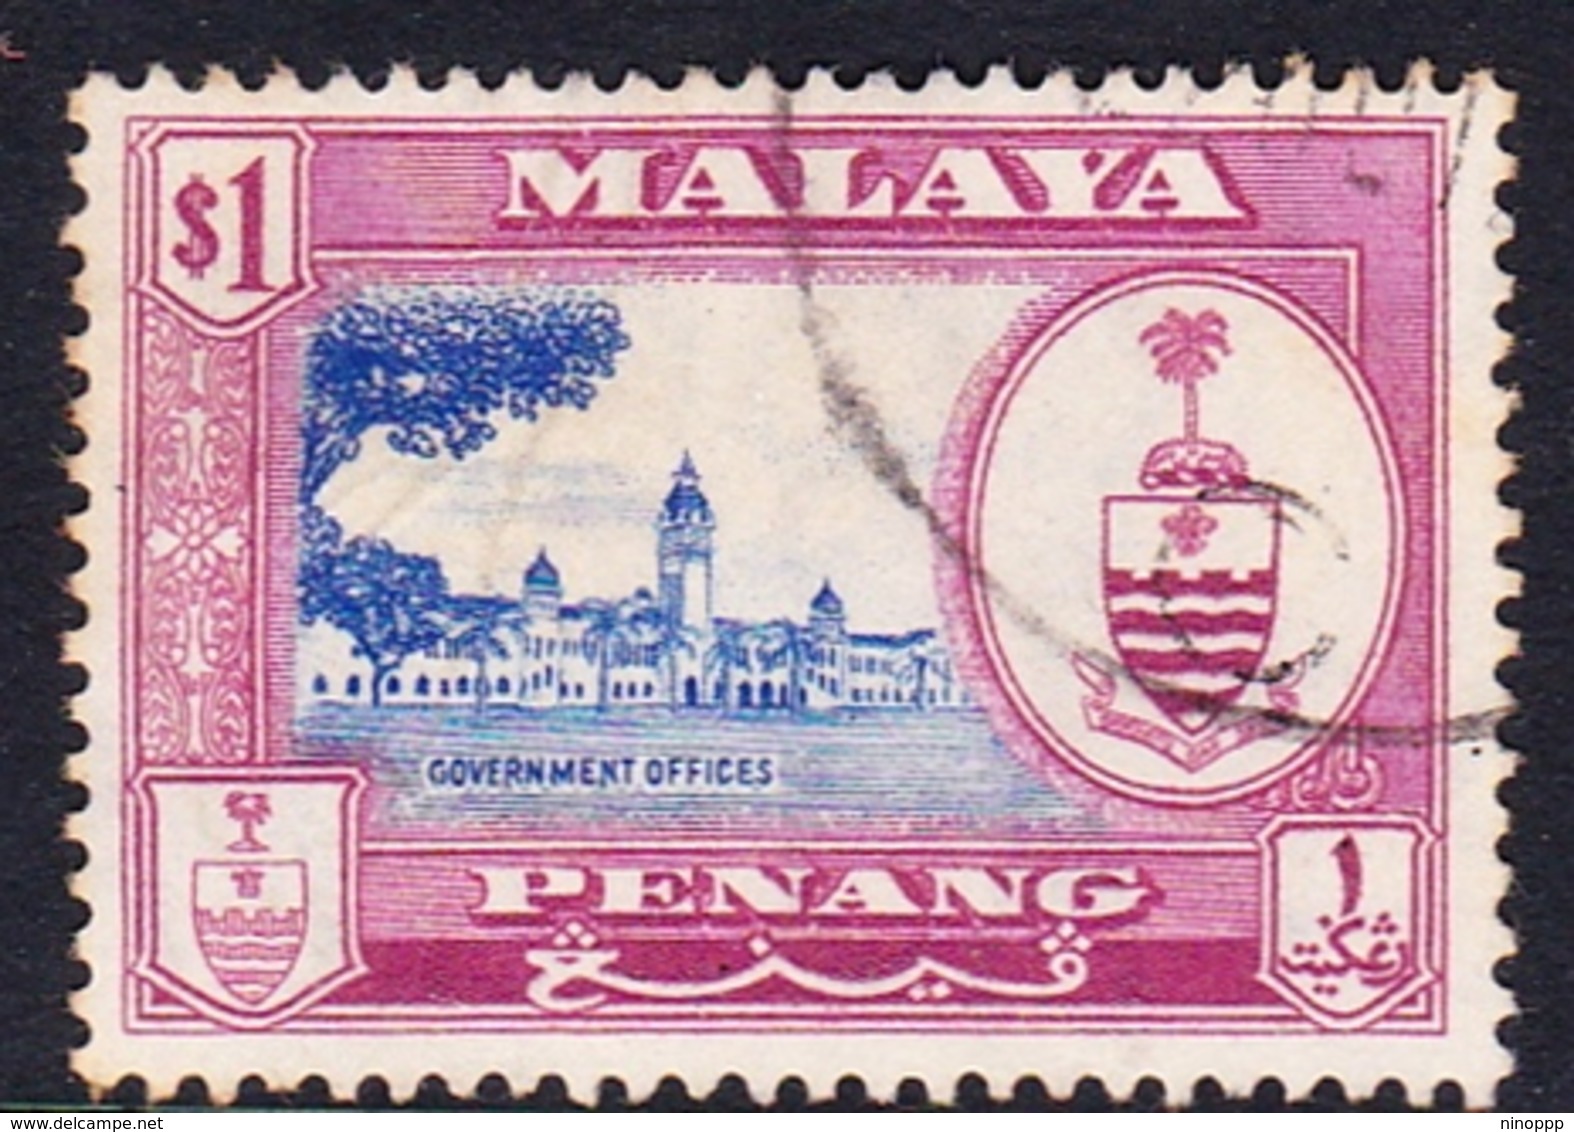 Malaysia-Penang SG 63 1960 Definitives, $ 1.00 Ultramarine And Redish Purple, Used - Penang